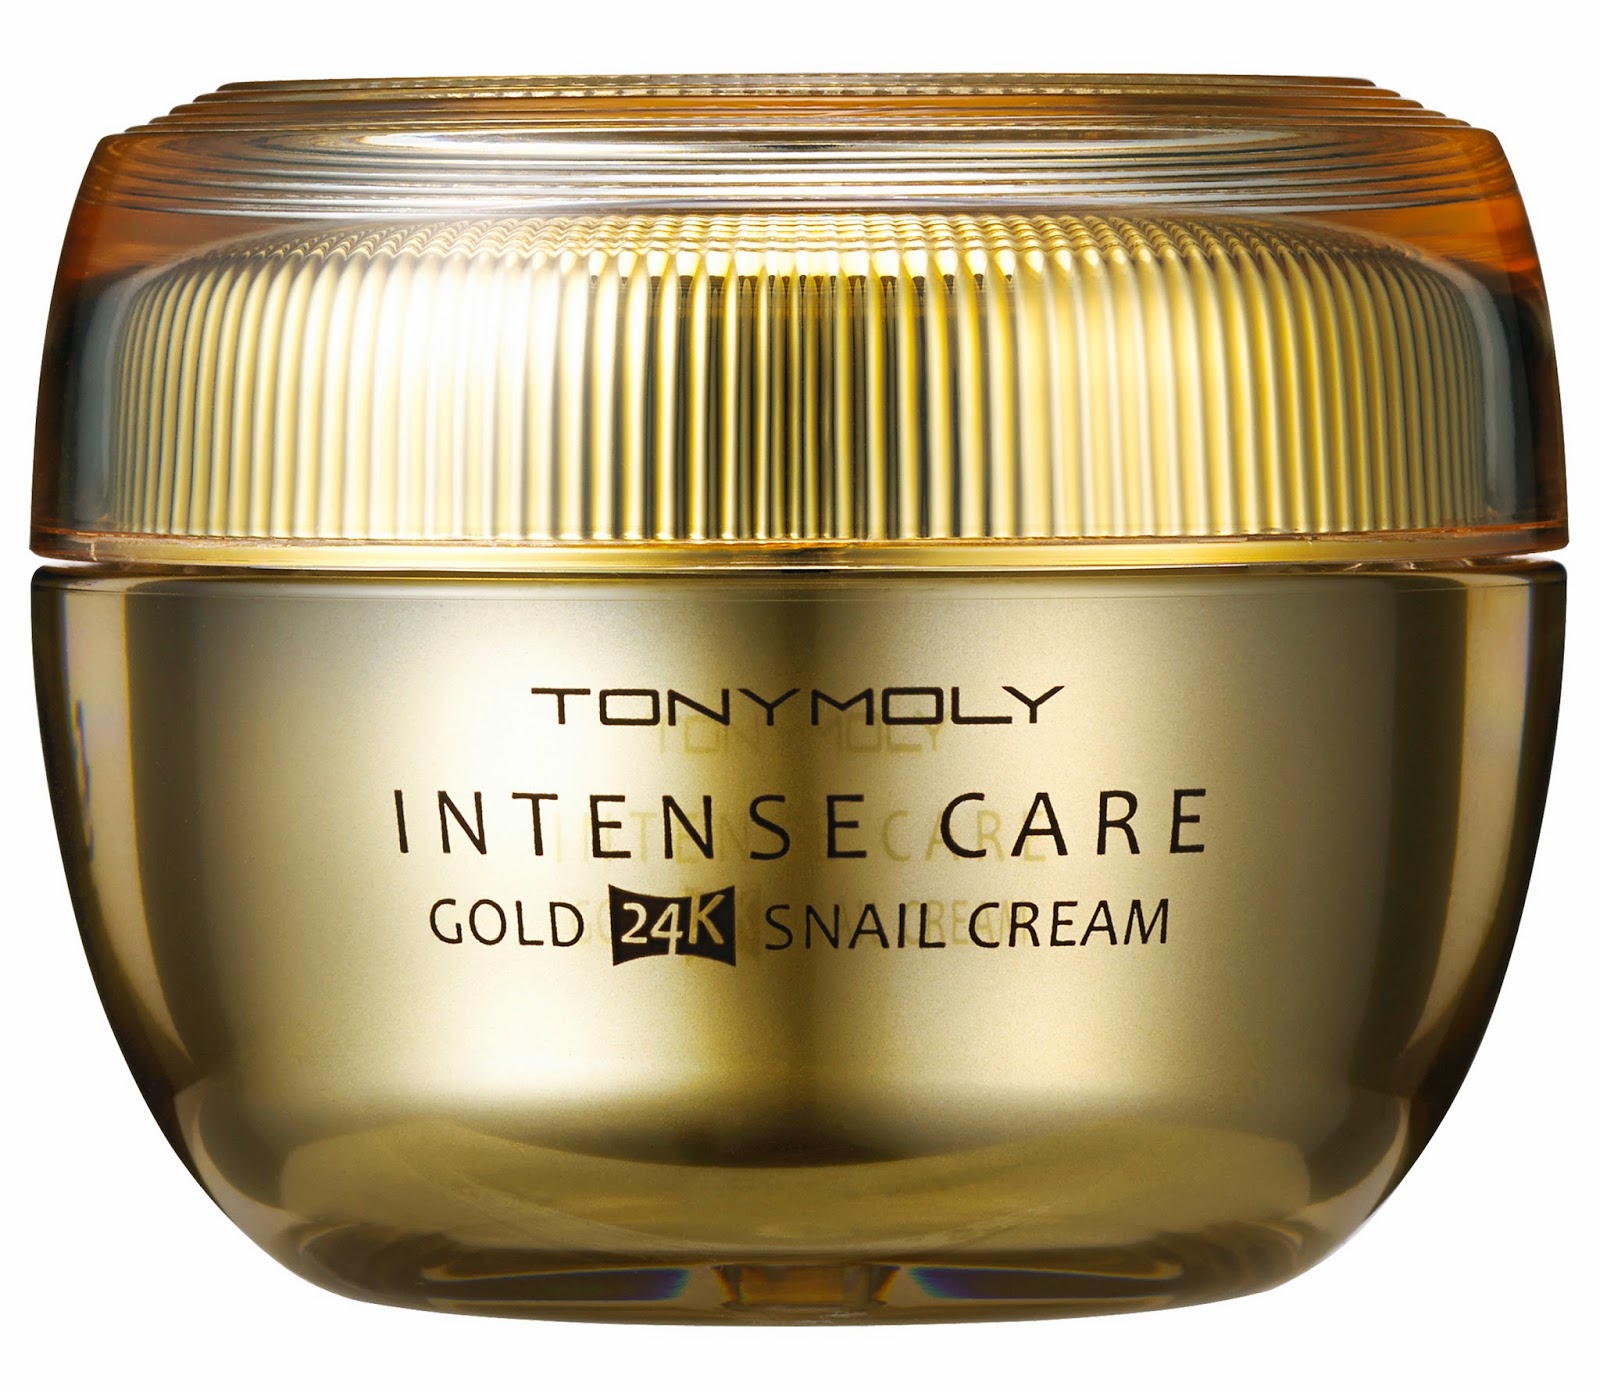 Золото улитка крем. Intense Care Gold 24k Snail Cream. TONYMOLY intense Care Gold Snail Cream. Tony Moly 24k Snail. Intense Care Gold 24k Snail Toner.